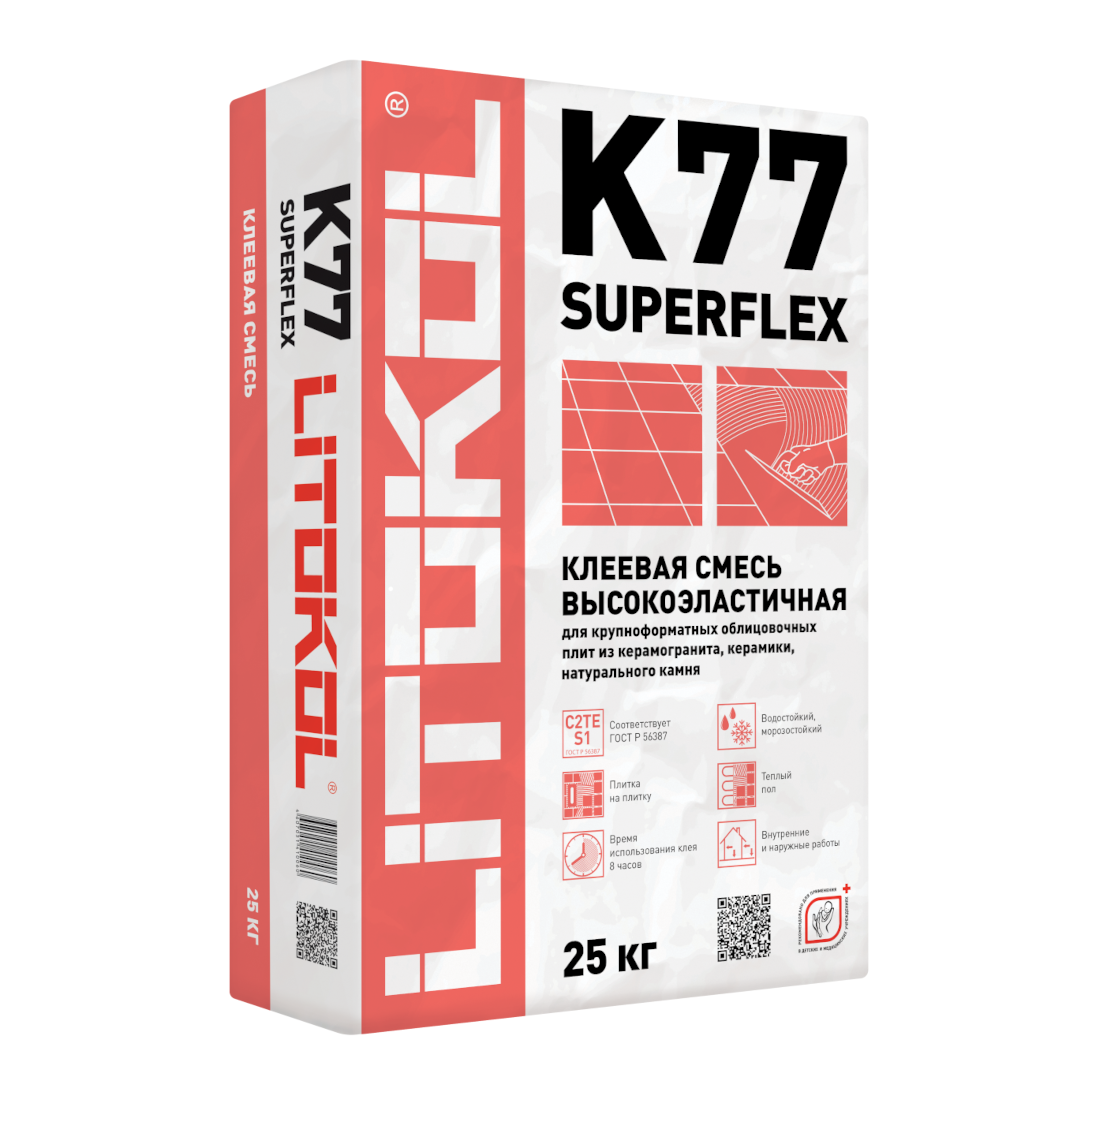    LITOKOL SUPERFLEX K77 25 